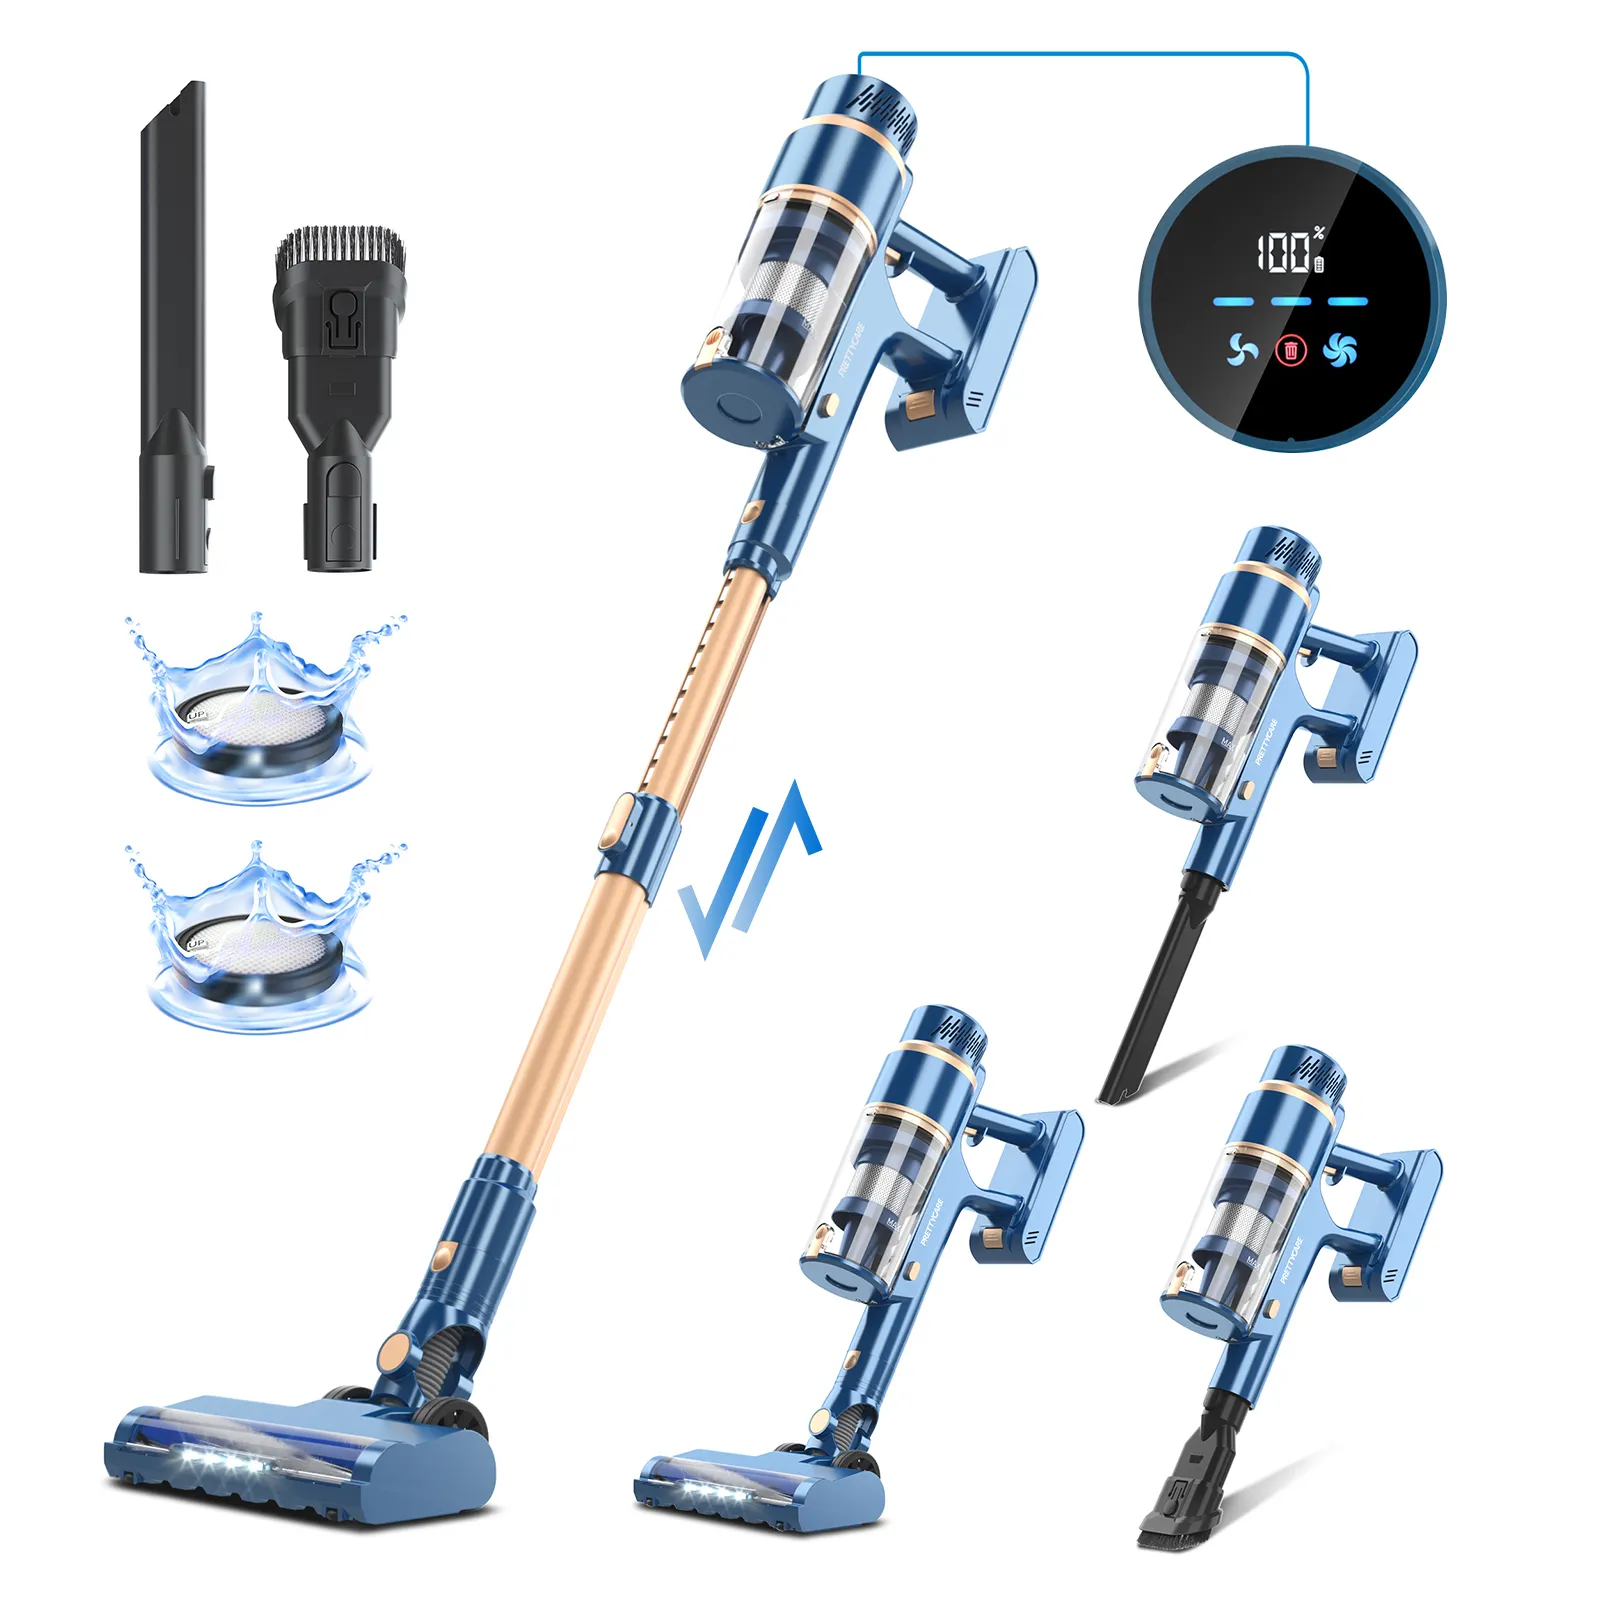 PRETTYCARE P2 Best Clean Supplier Manufacture Upright Machine Cordless Wireless Stick Handy 2 in 1 Vacuum Cleaner